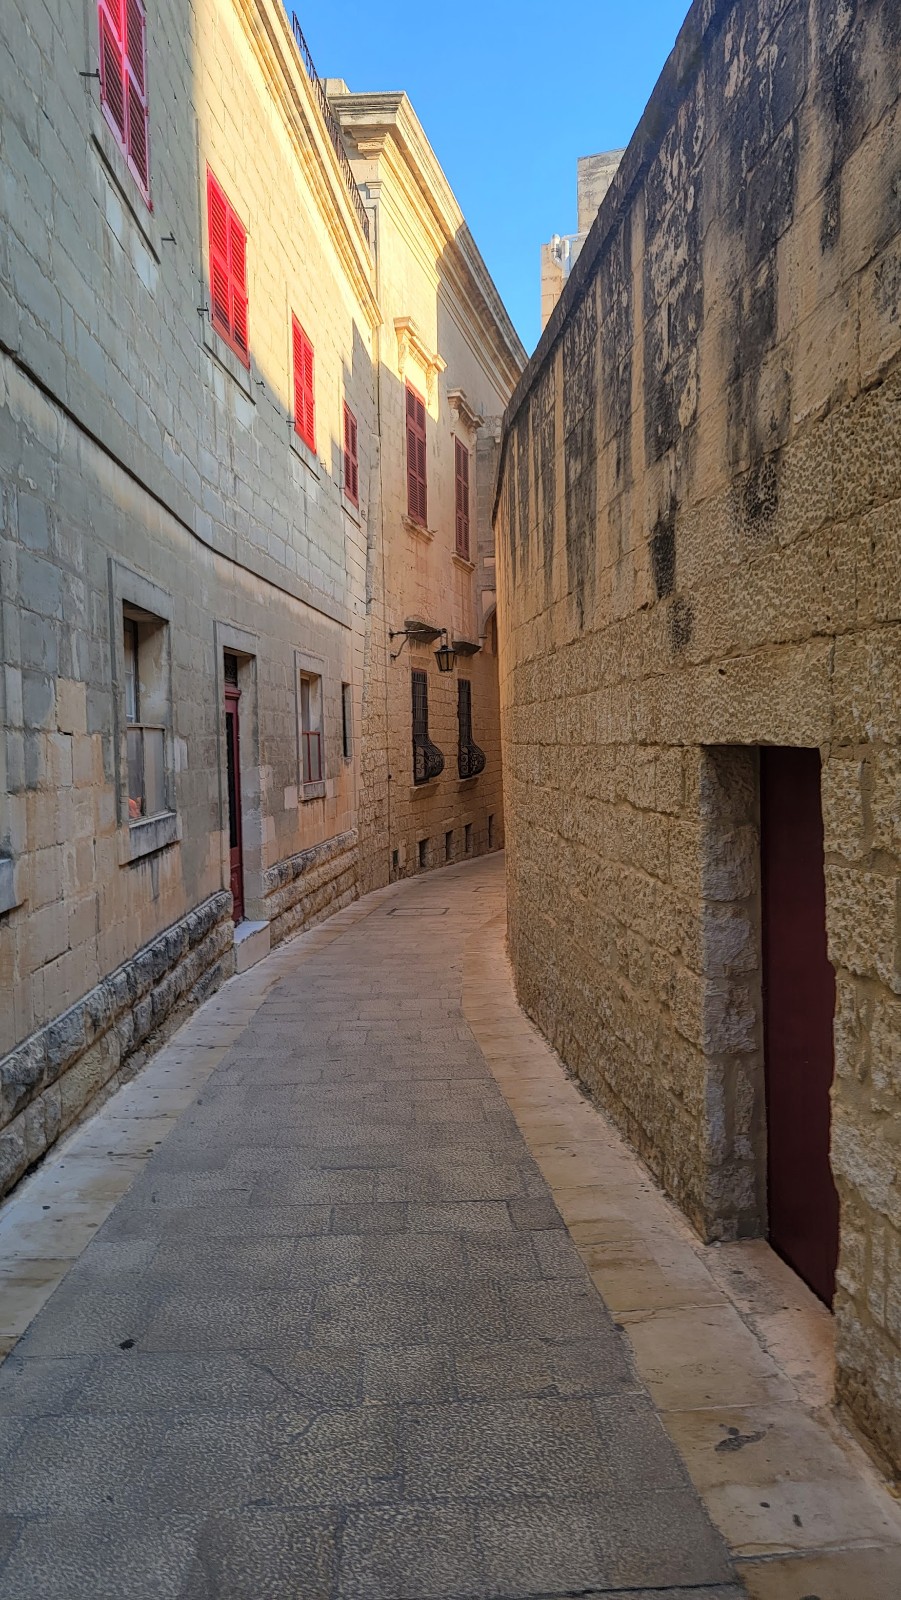 a narrow street between stone buildings